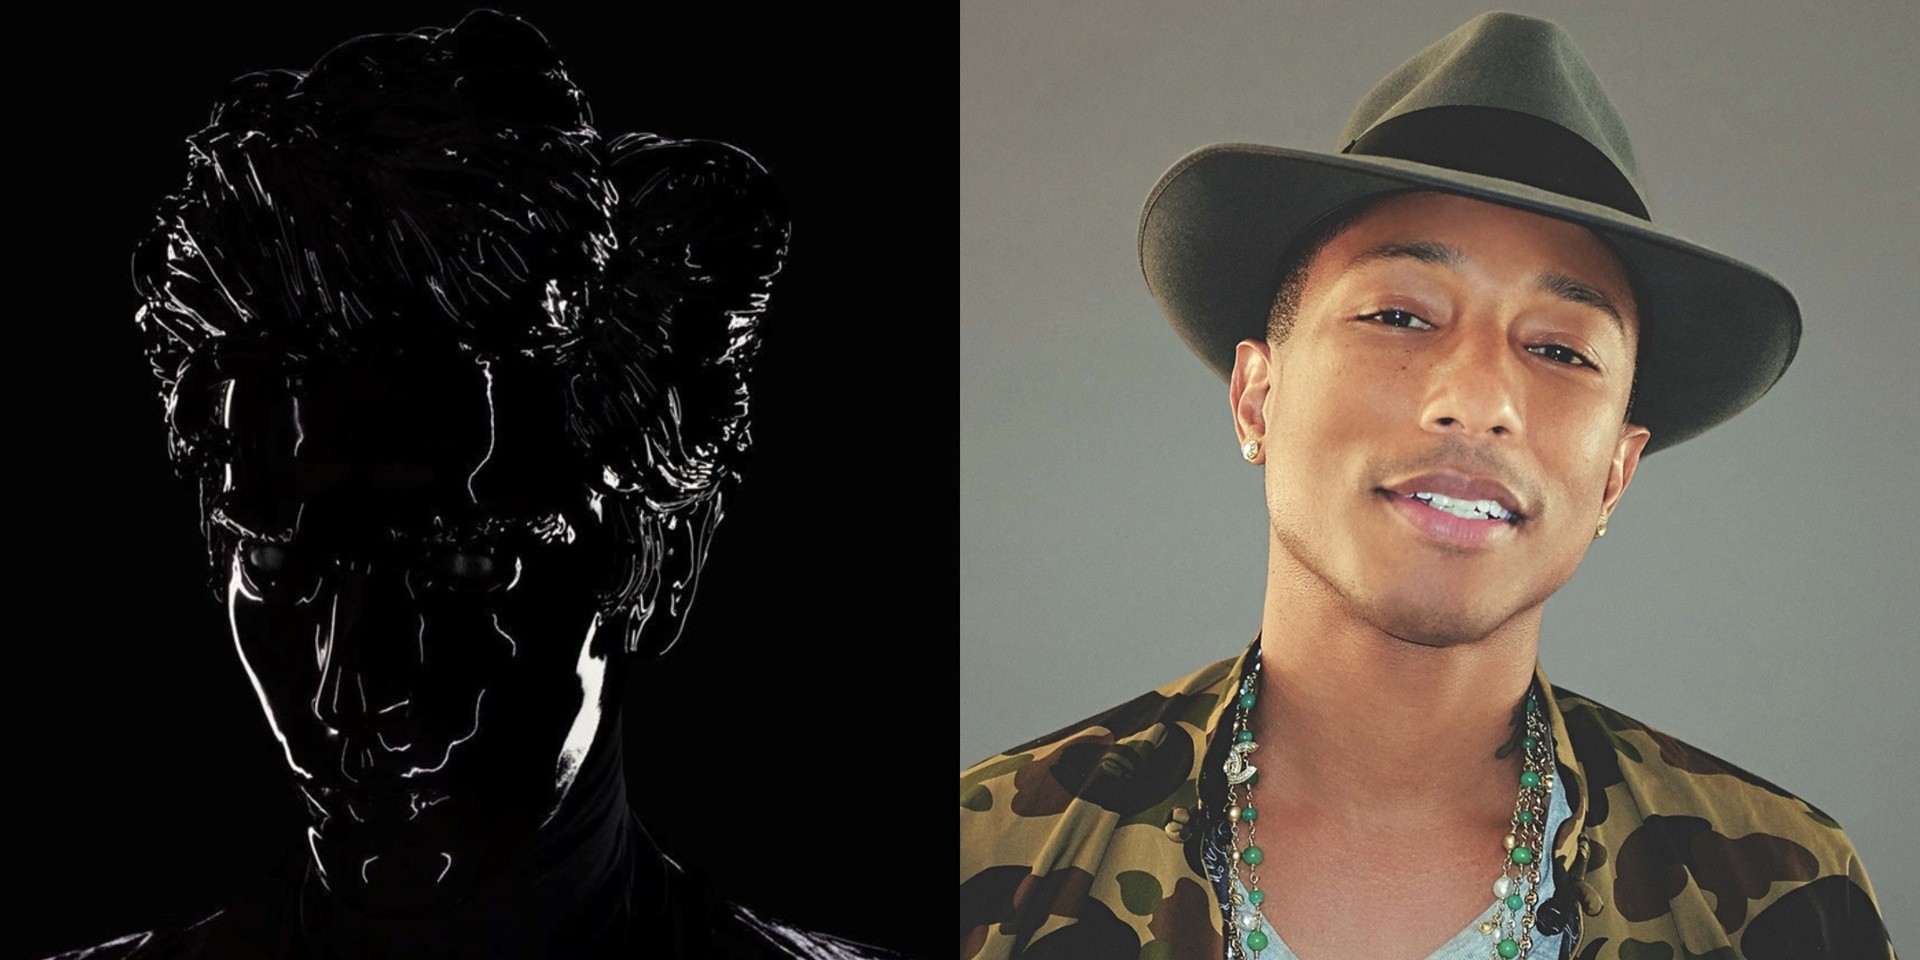 Gesaffelstein releases groovy new single 'Blast Off' with Pharrell – listen 